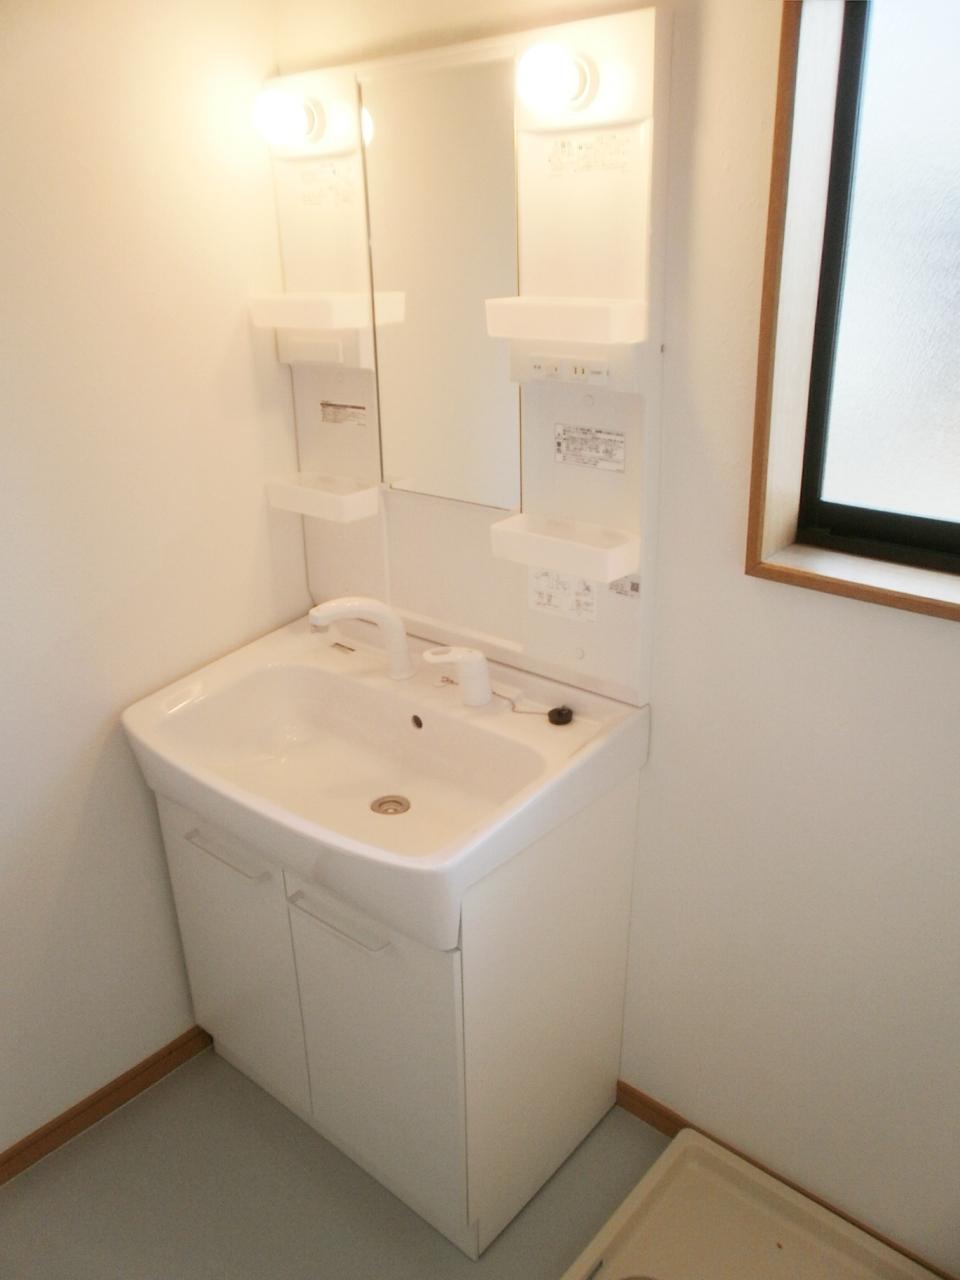 Wash basin, toilet. Indoor (April 23, 2013) Shooting